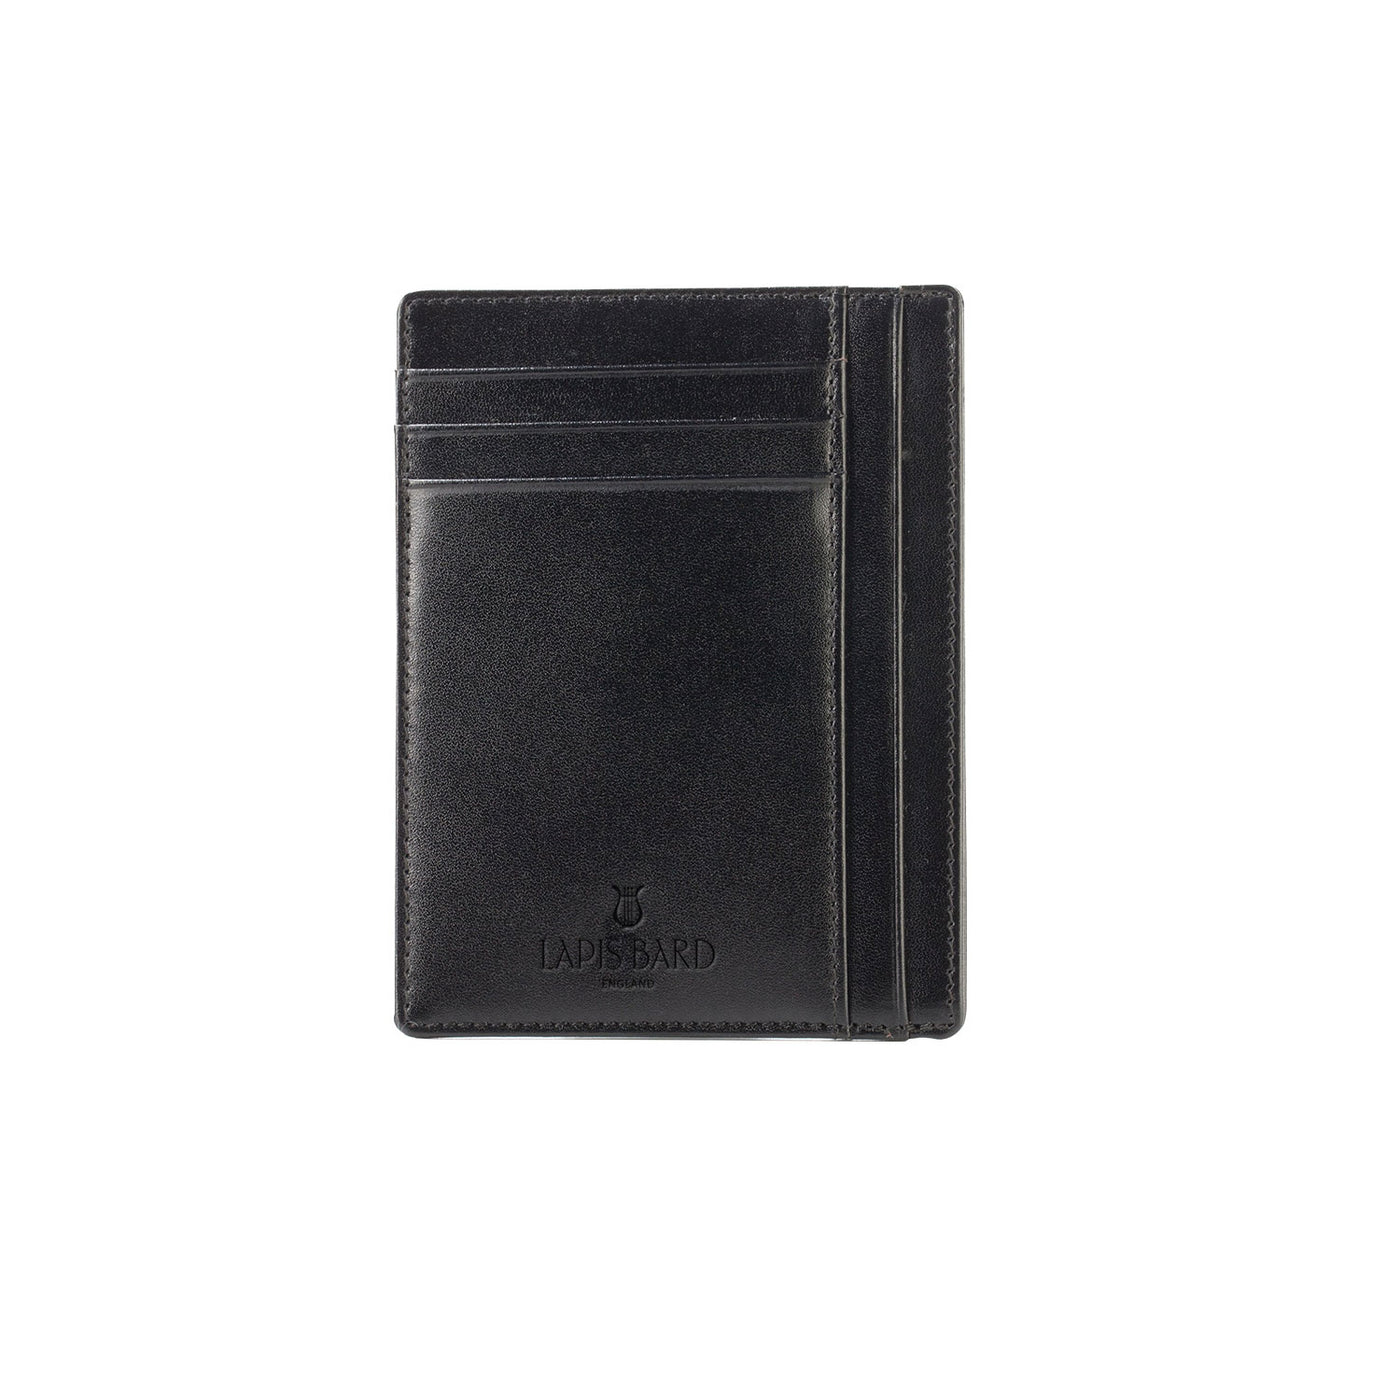 Lapis Bard Mayfair 6cc Credit Card Holder - Black 1